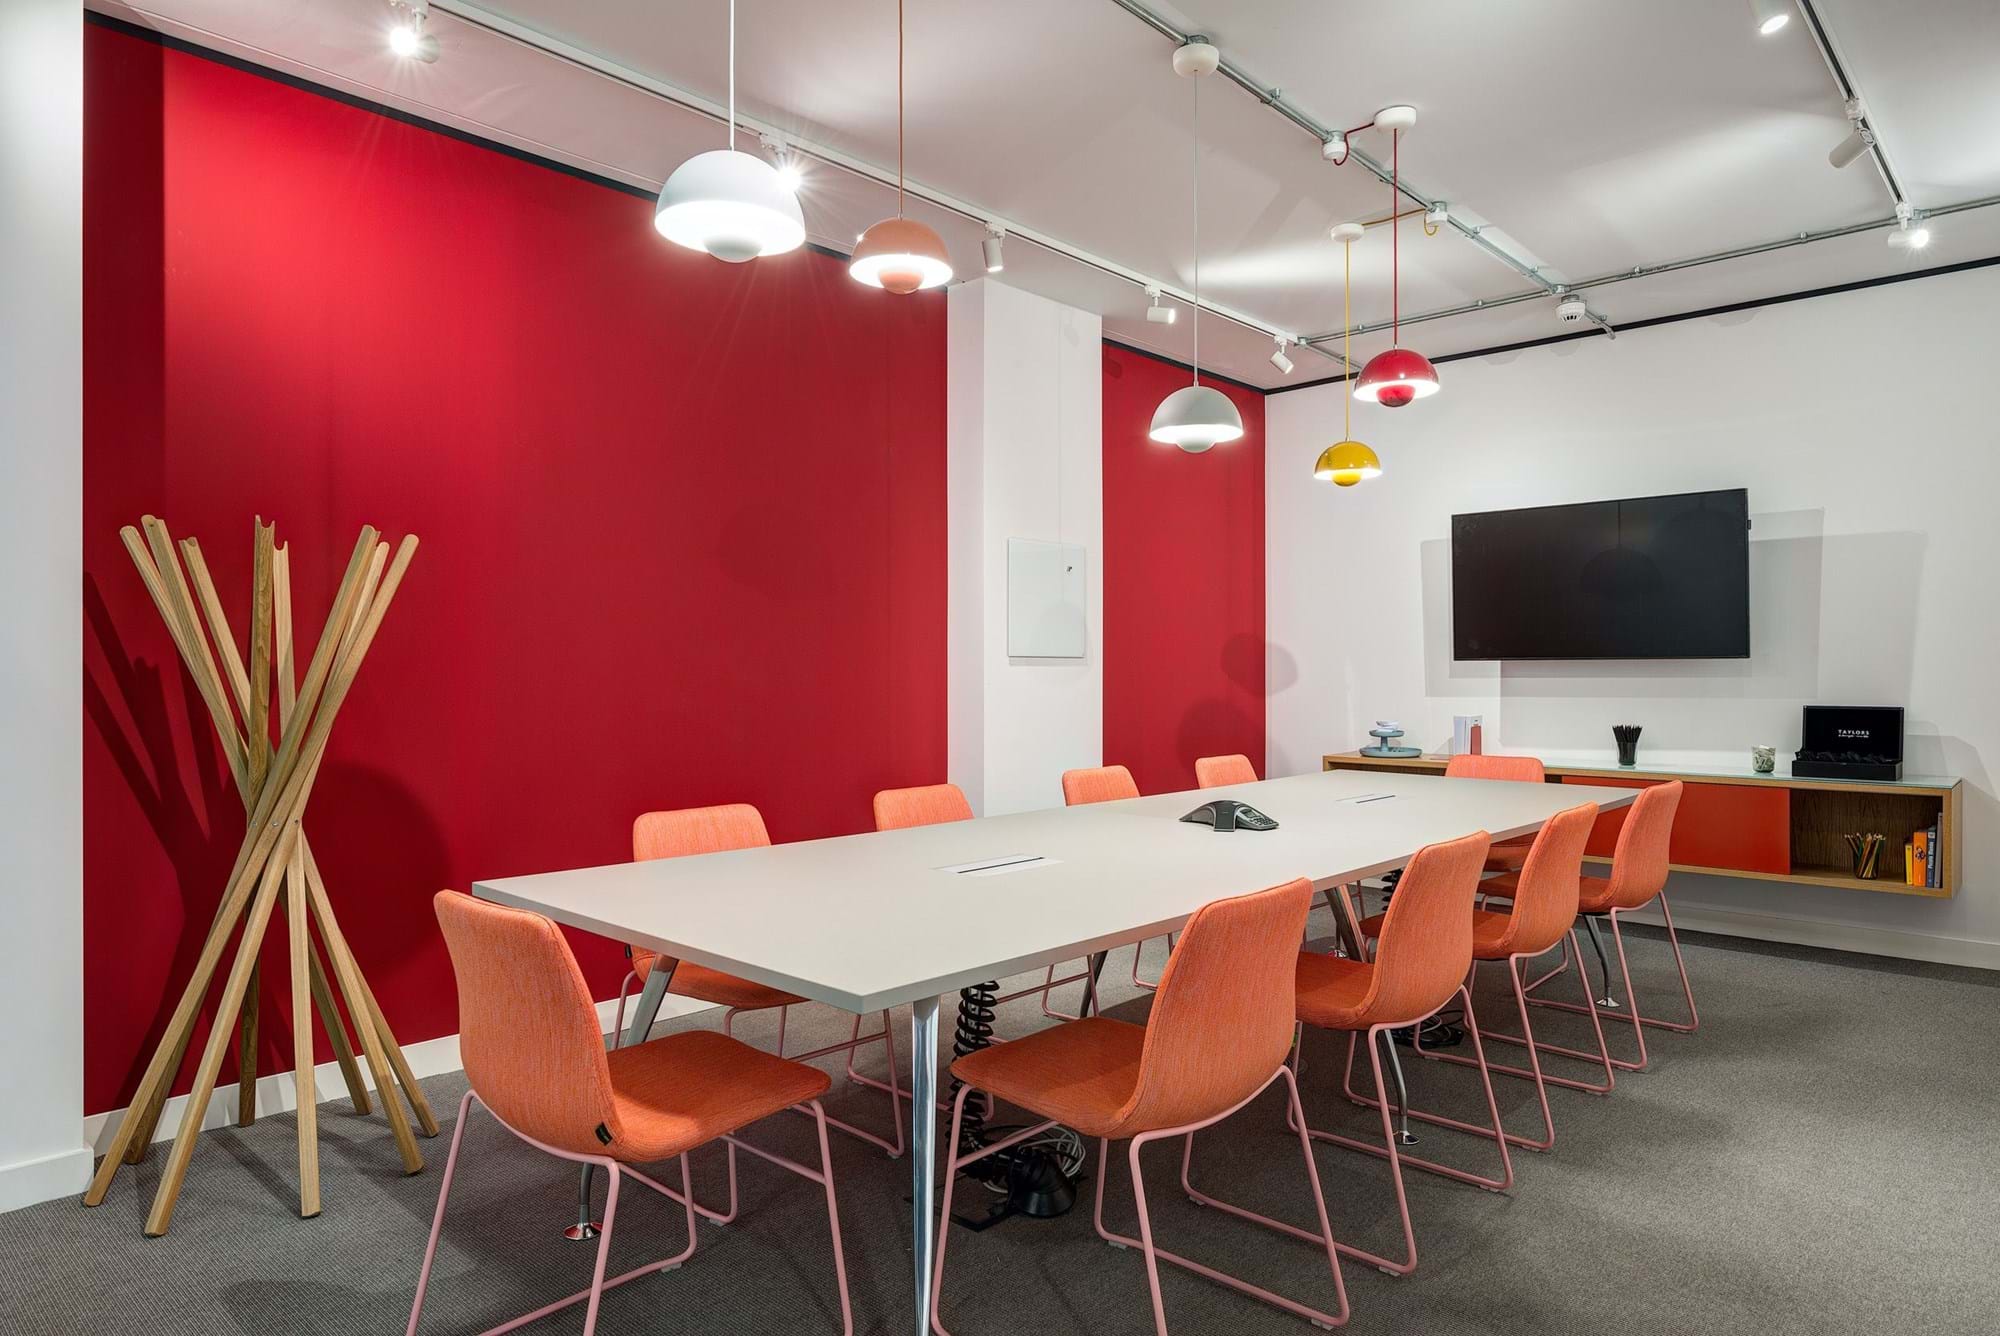 Modus Workspace office design, fit out and refurbishment - Spaces - Uxbridge - Spaces Uxbridge 14 highres sRGB.jpg